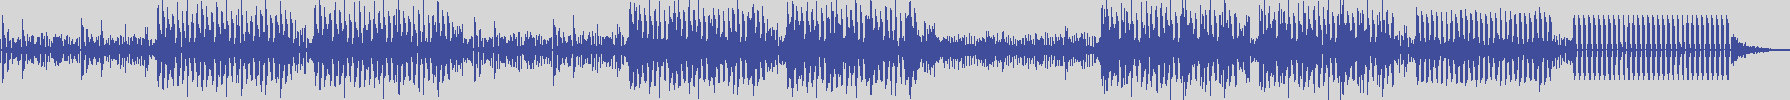 nf_boyz_records [NFY025] Alexander Prada - Morning Breeze [Deep Philosophy Mix] audio wave form